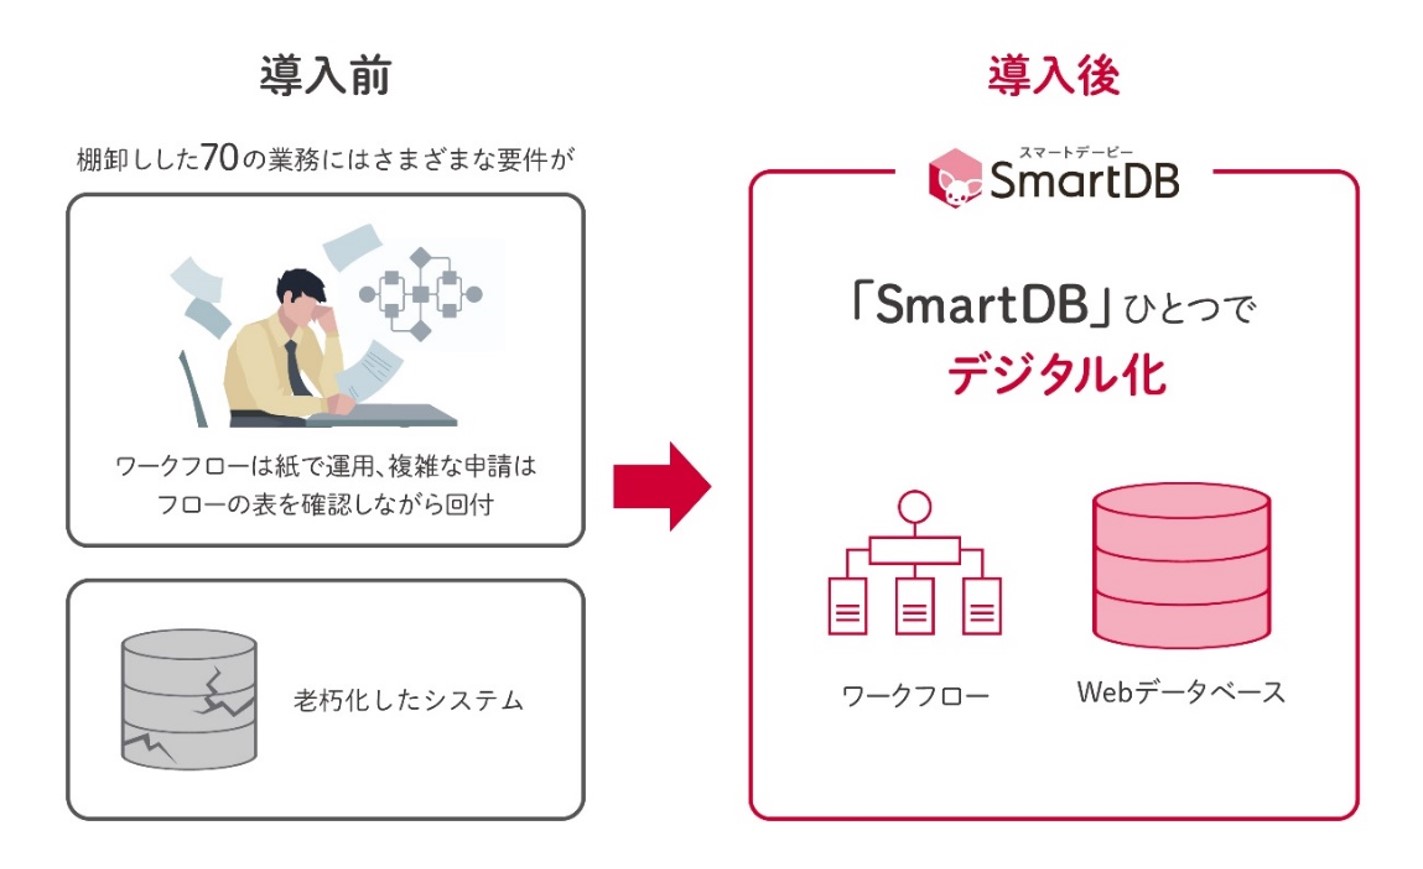 「SmartDB」で業務をデジタル化したイメージ）